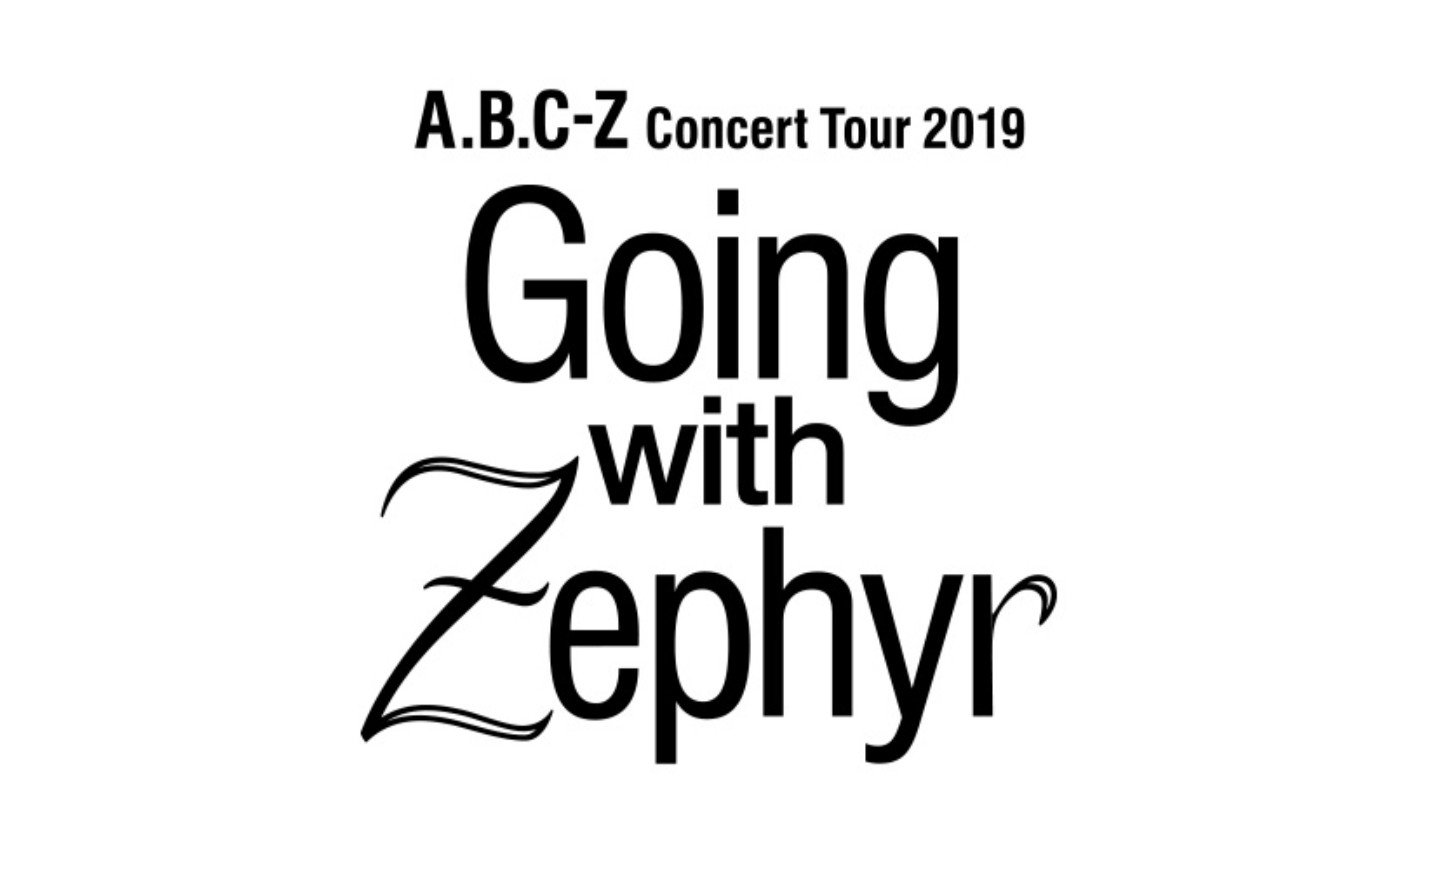 A.B.C-Z Concert Tour 2019 Going w/Zephyr